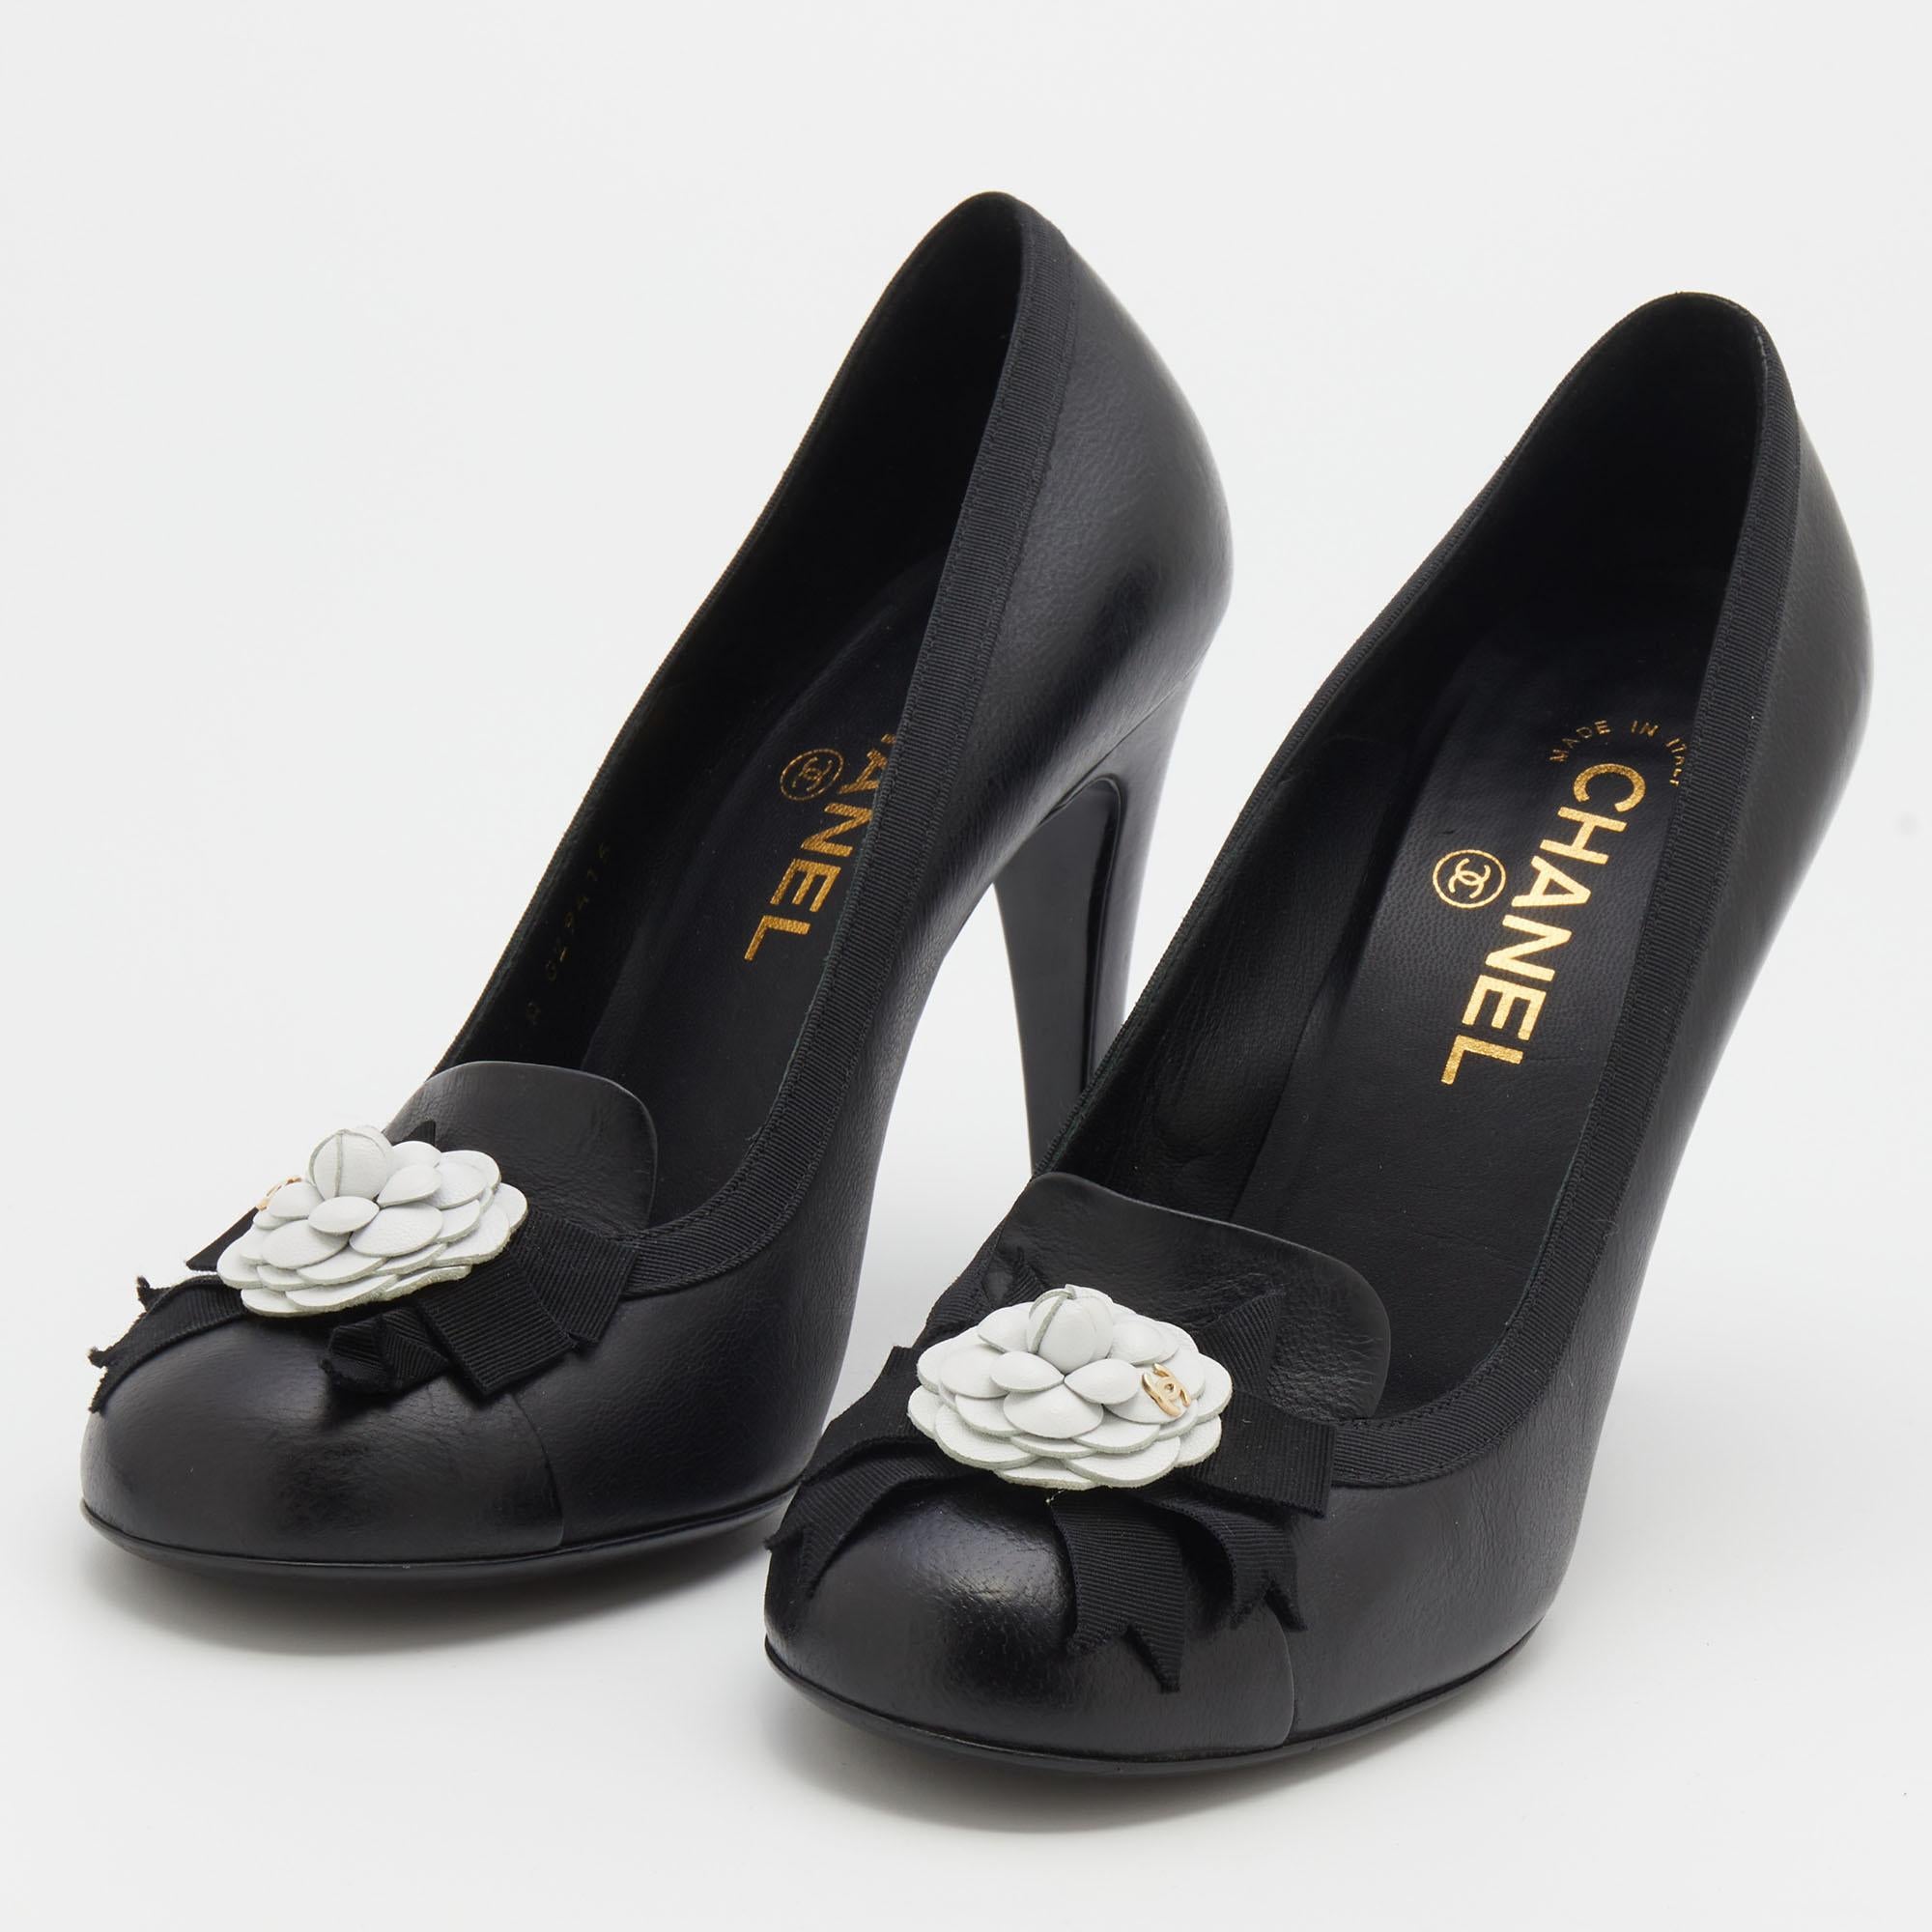 Women's Chanel Black/White Leather Camellia CC Pumps Size 38